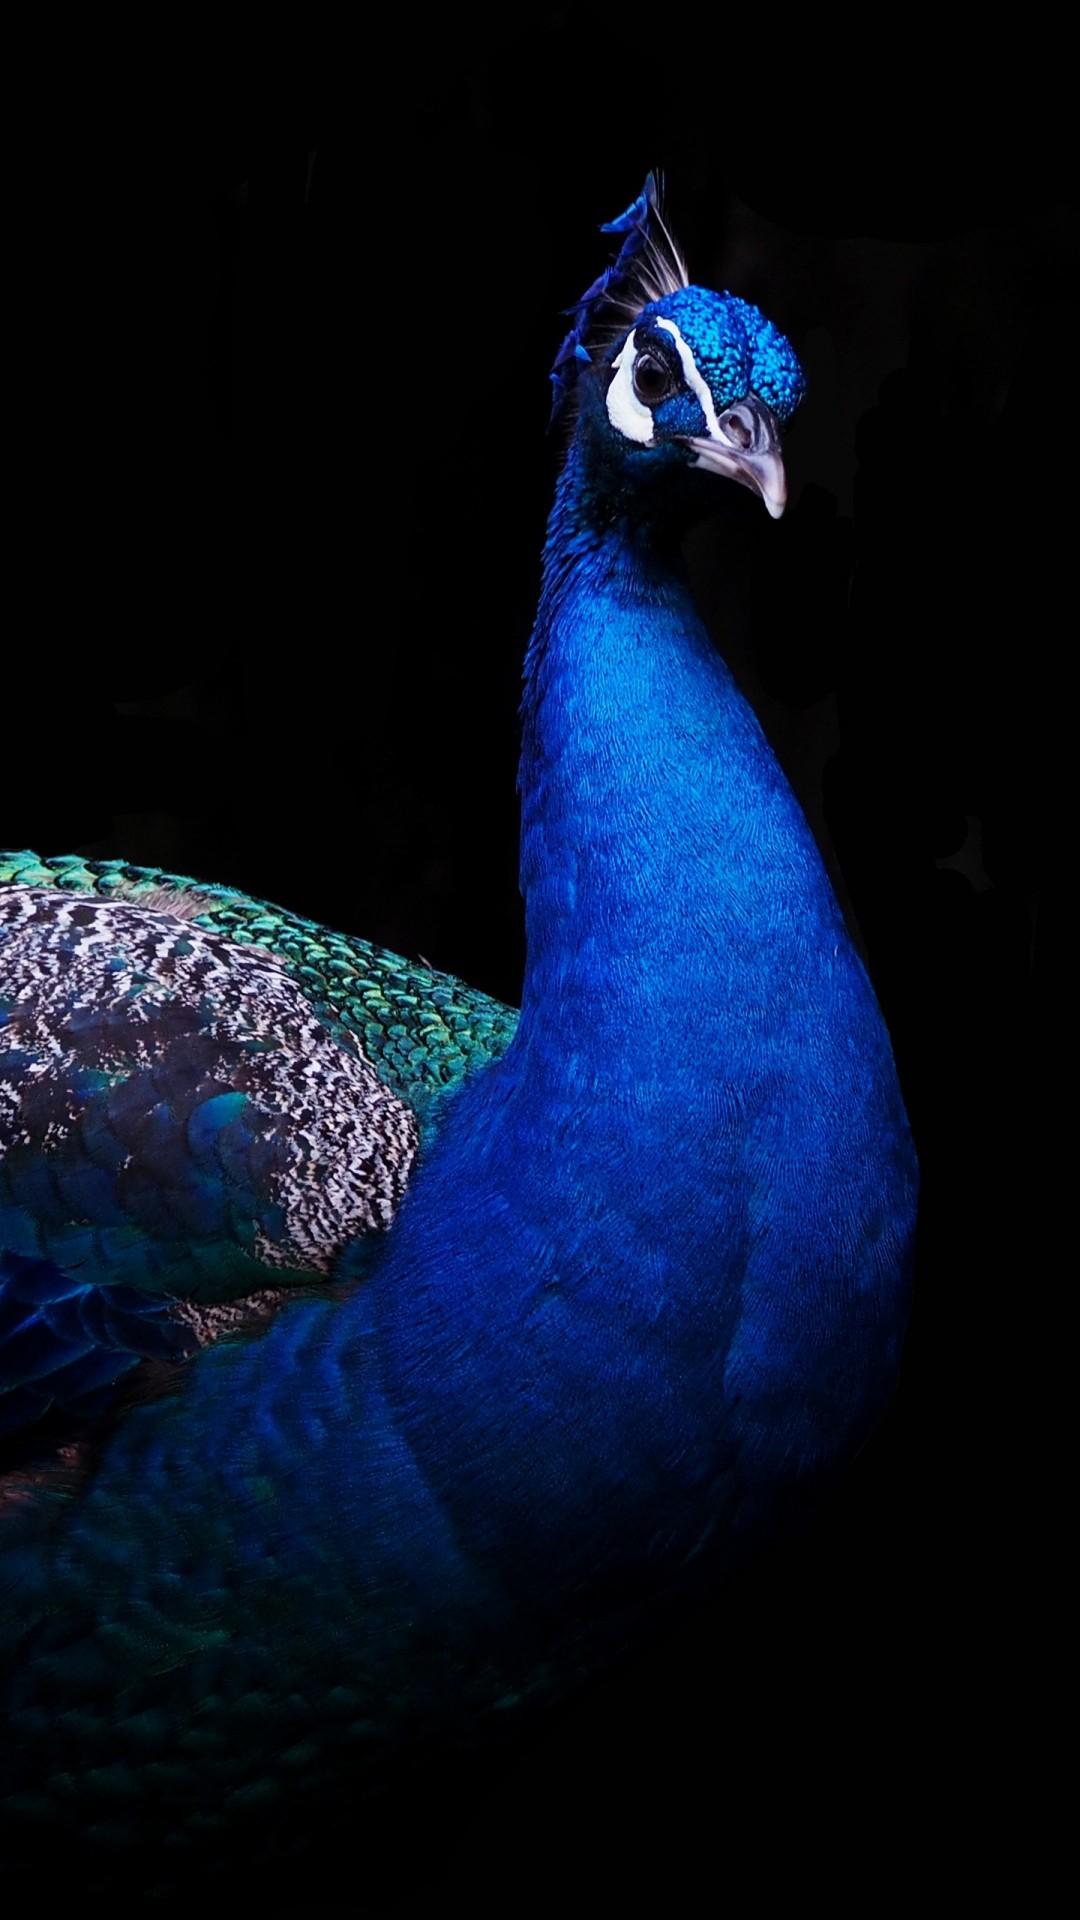 WALLPAPERS HD: Peacock